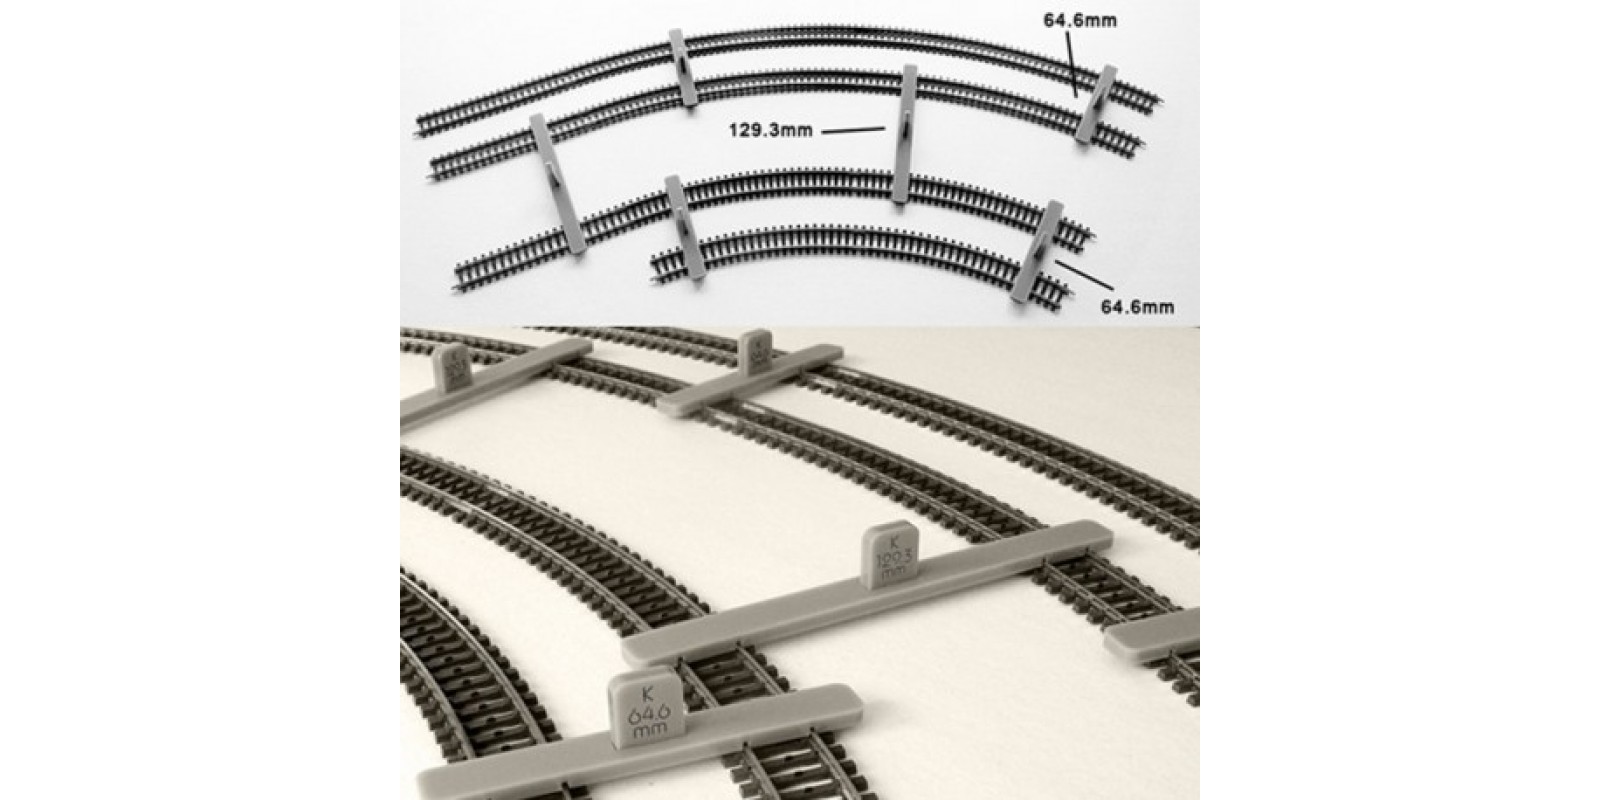 PS-PT-HO-MK Parallel Track Tool Set for Marklin K-Track